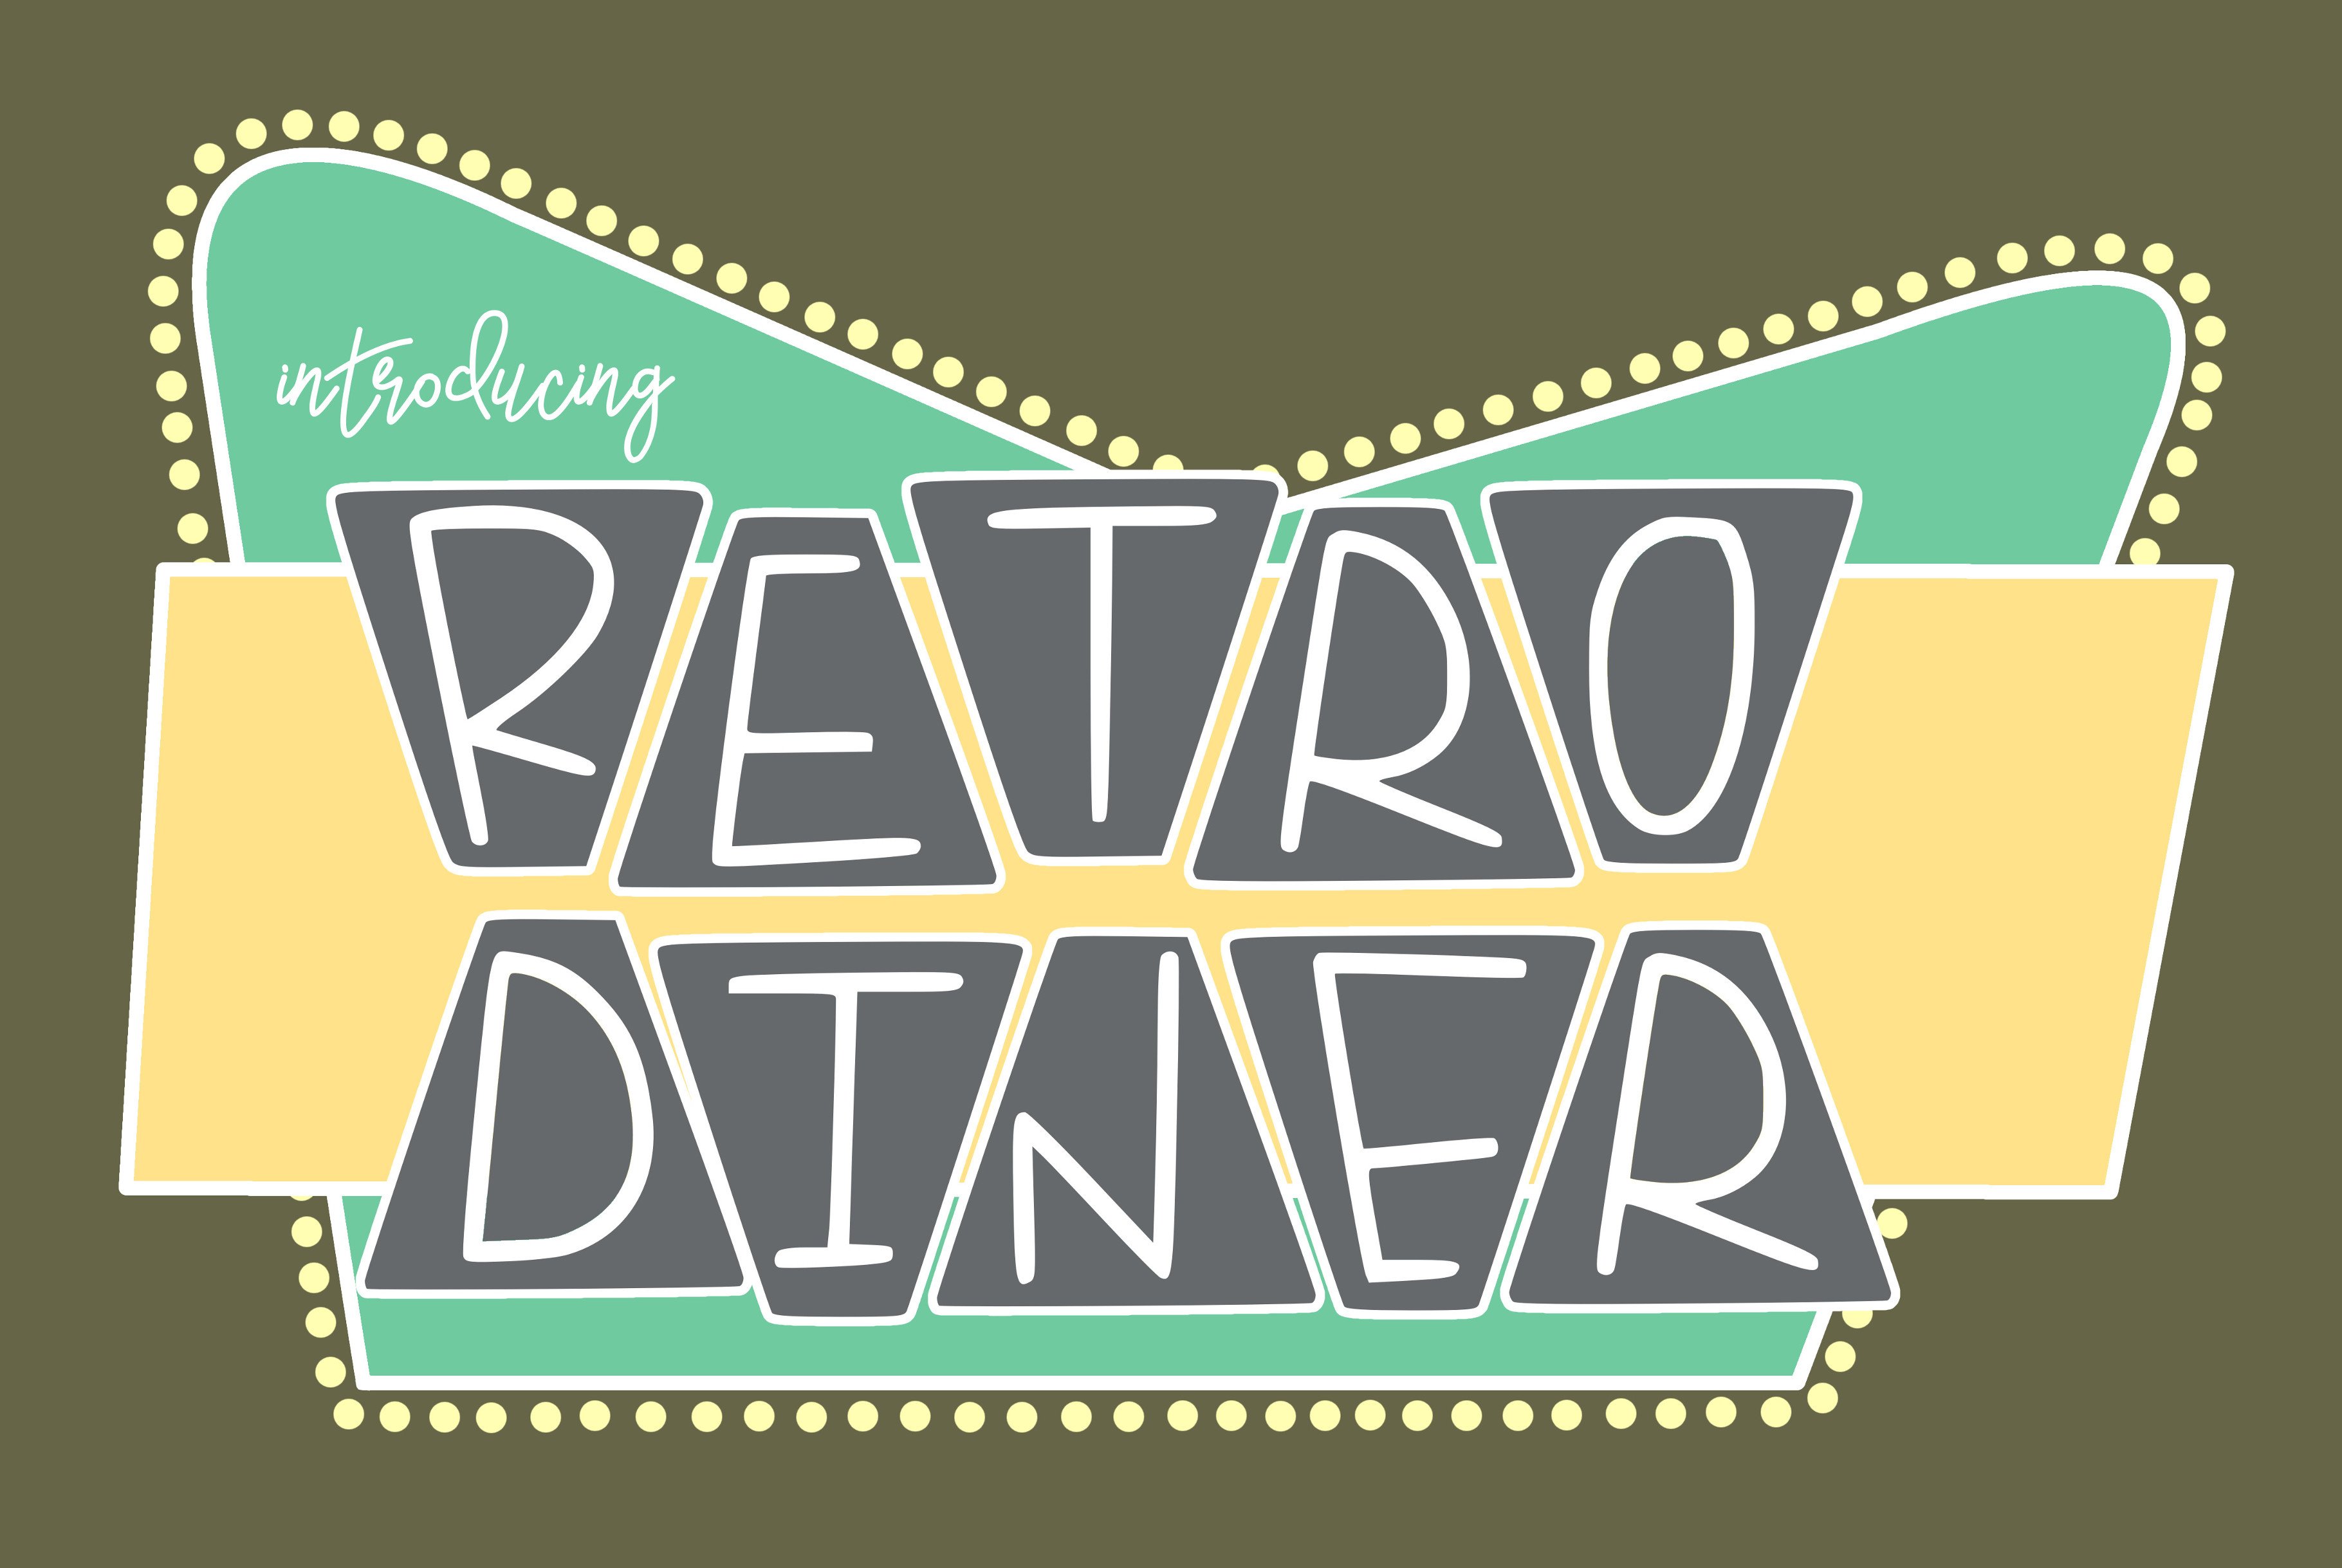 Retro Diner cover image.